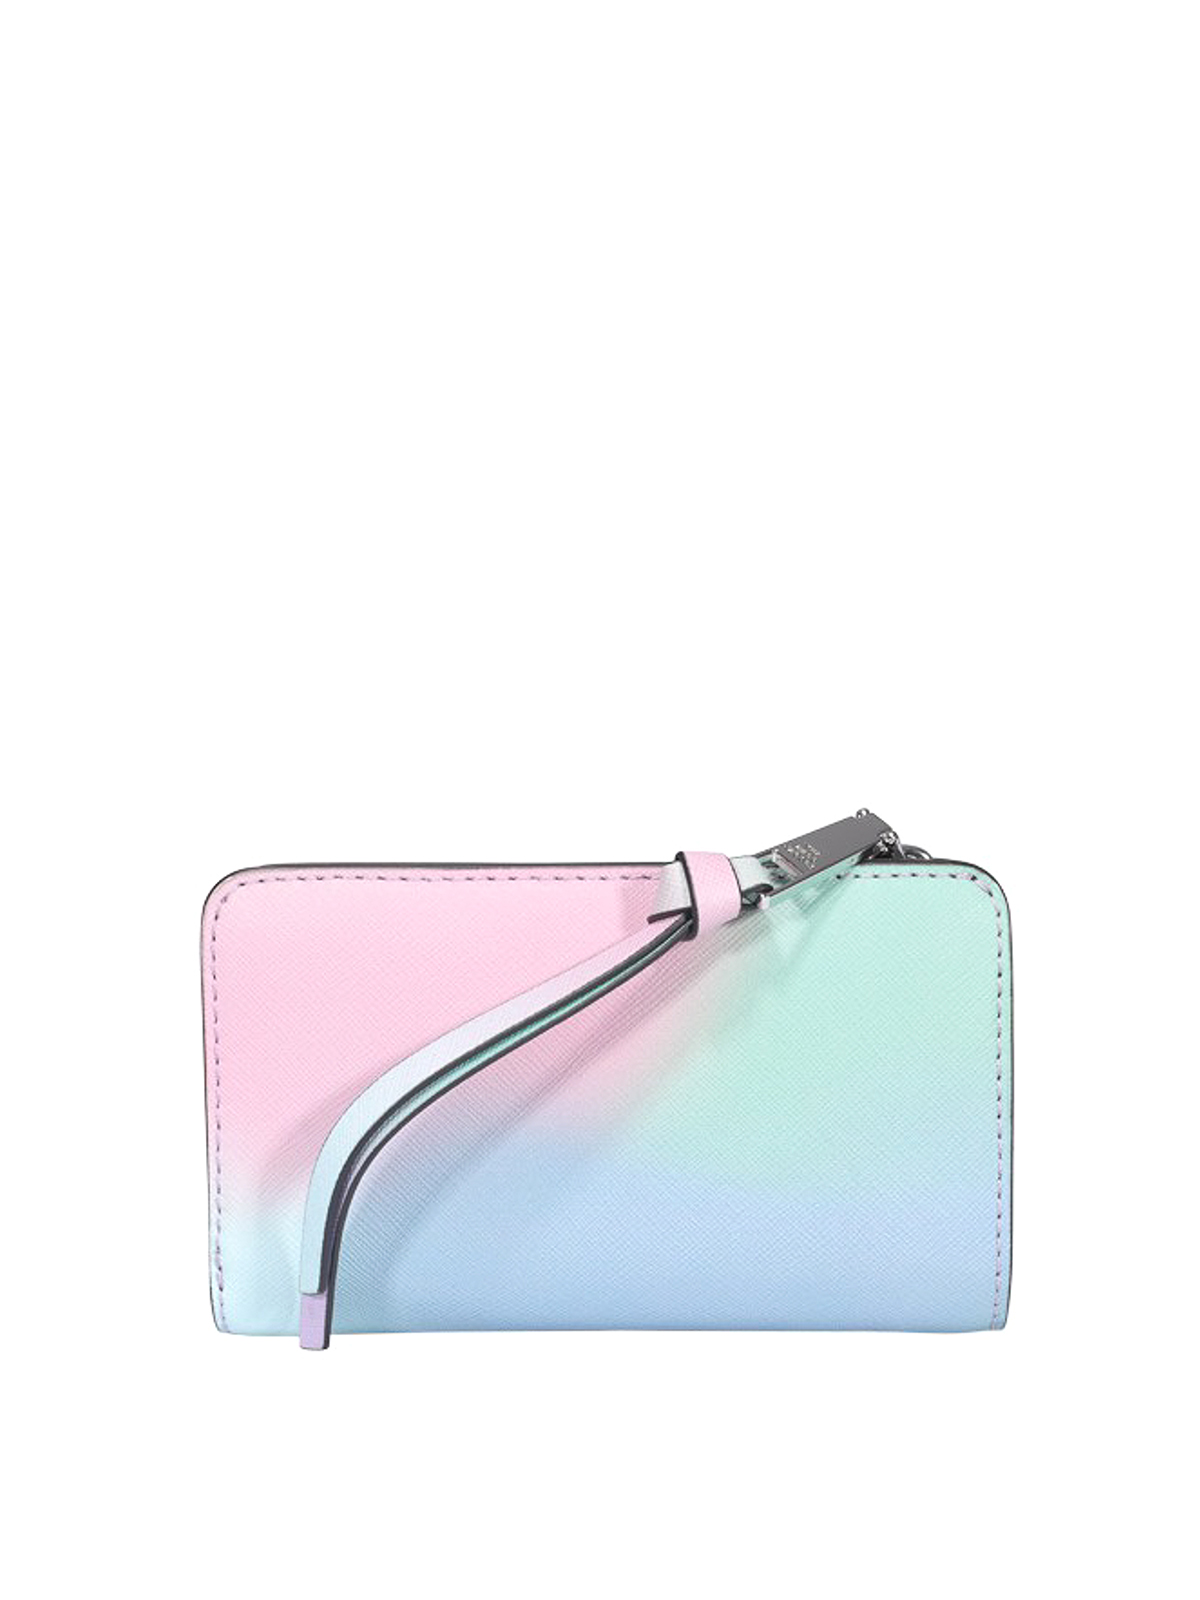 MJ Snapshot Airbrush Multicolour Crossbody Bag, Women's Fashion